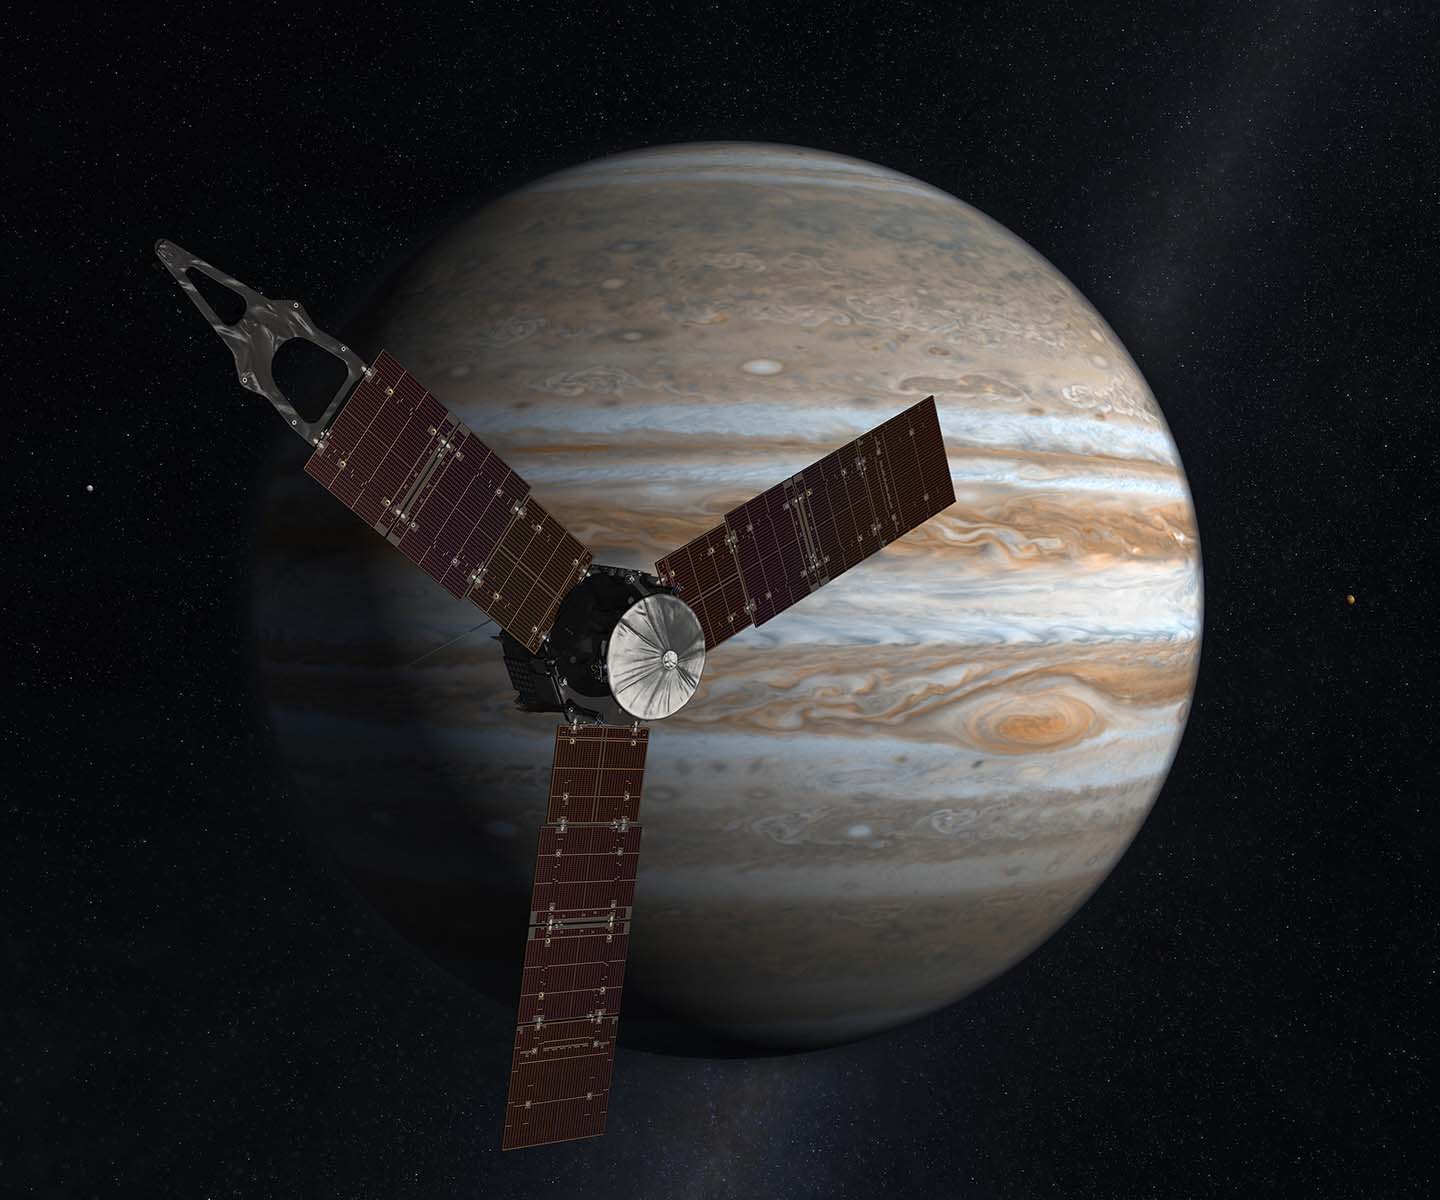 Artist’s impression of NASA’s Juno spacecraft